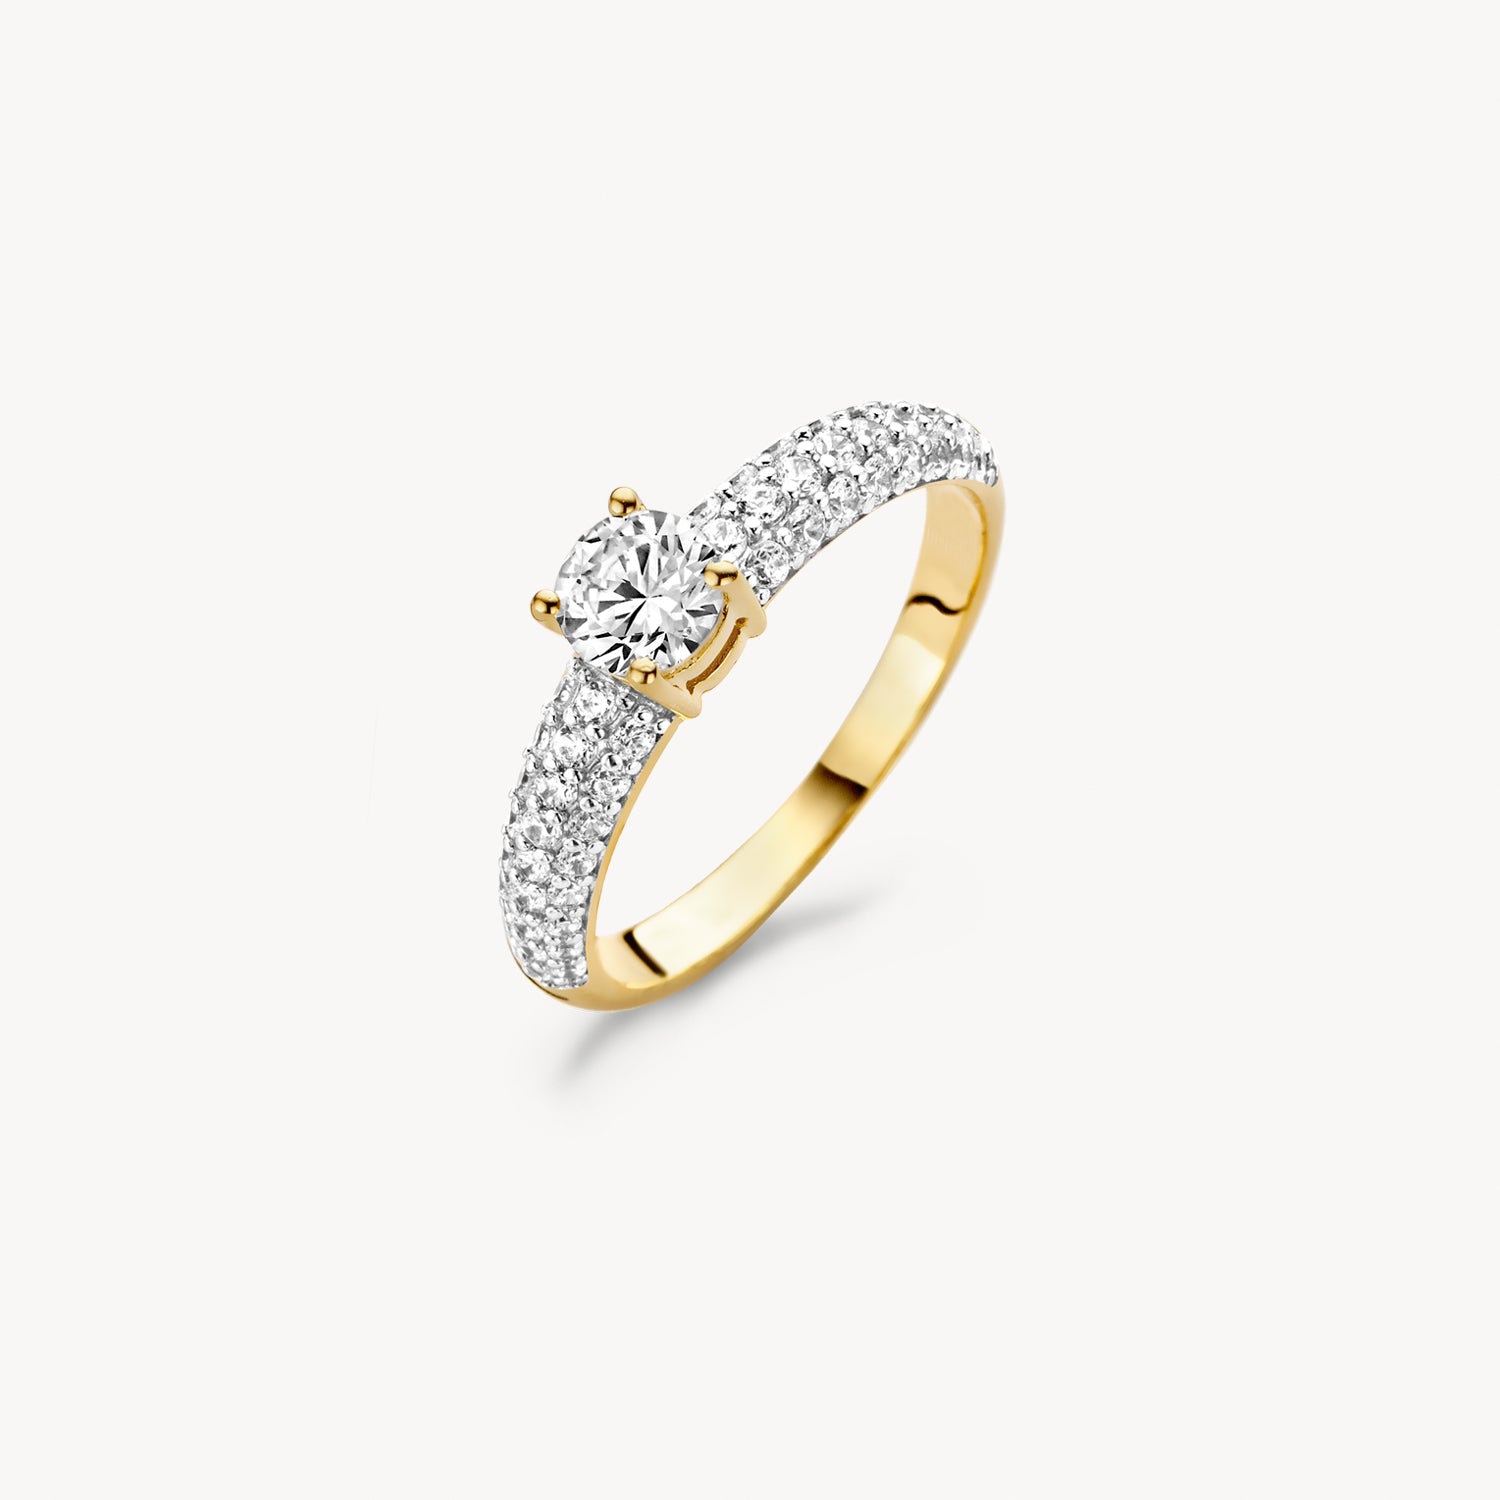 Ring 1135WZI - 14k White Gold with Zirconia